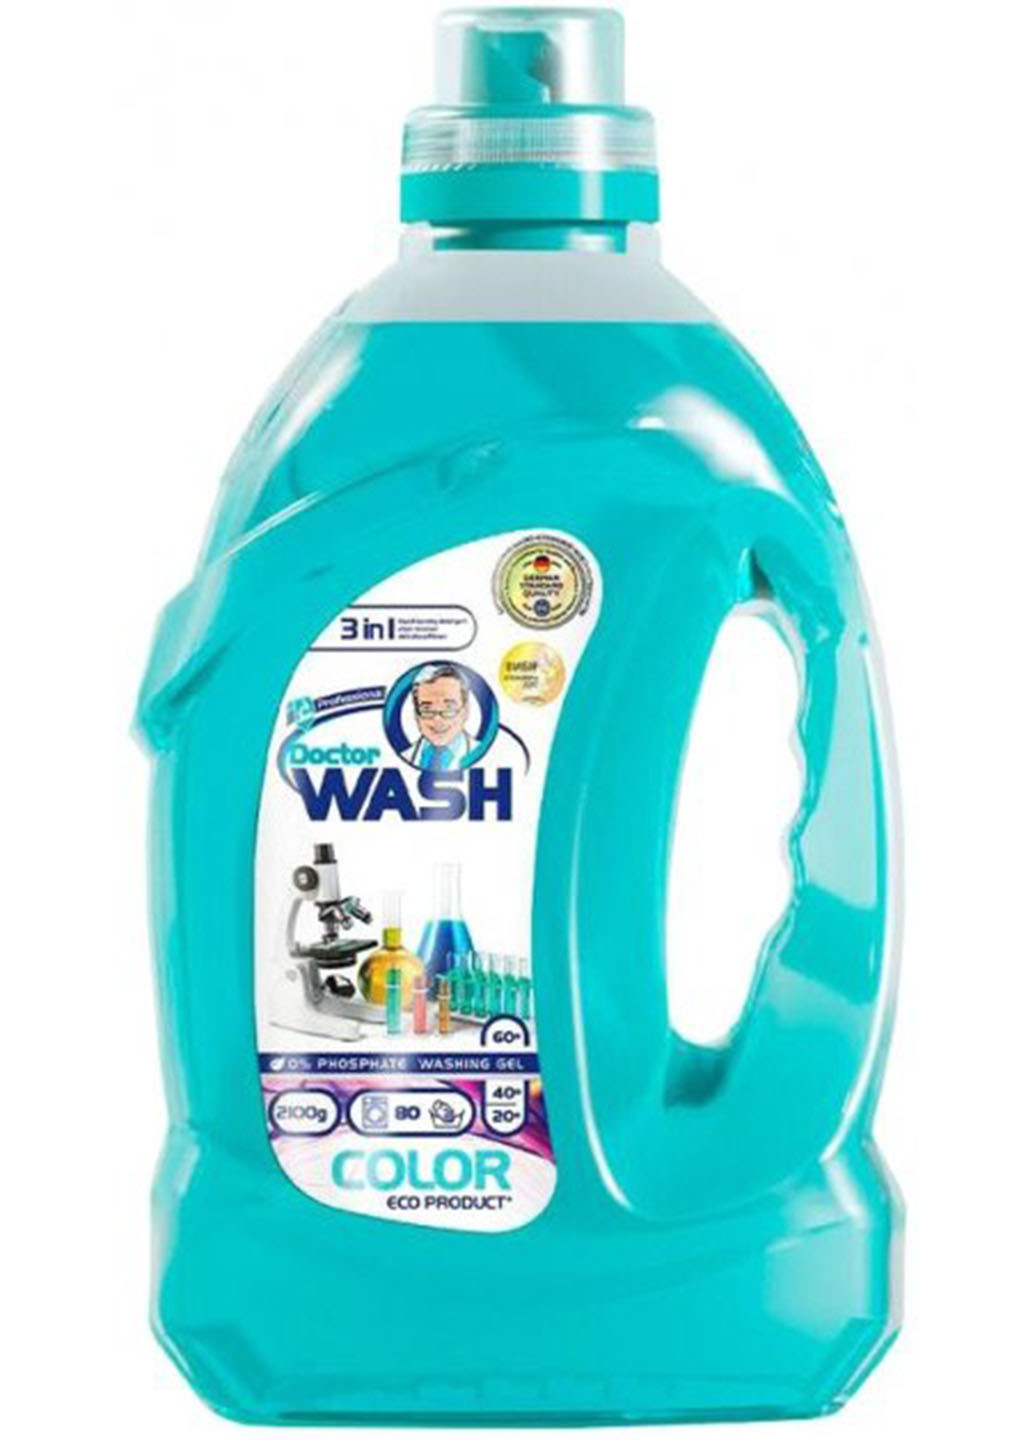 Гель для прання кольорових речей 2.1 кг (90 прань) Doctor Wash (254255791)